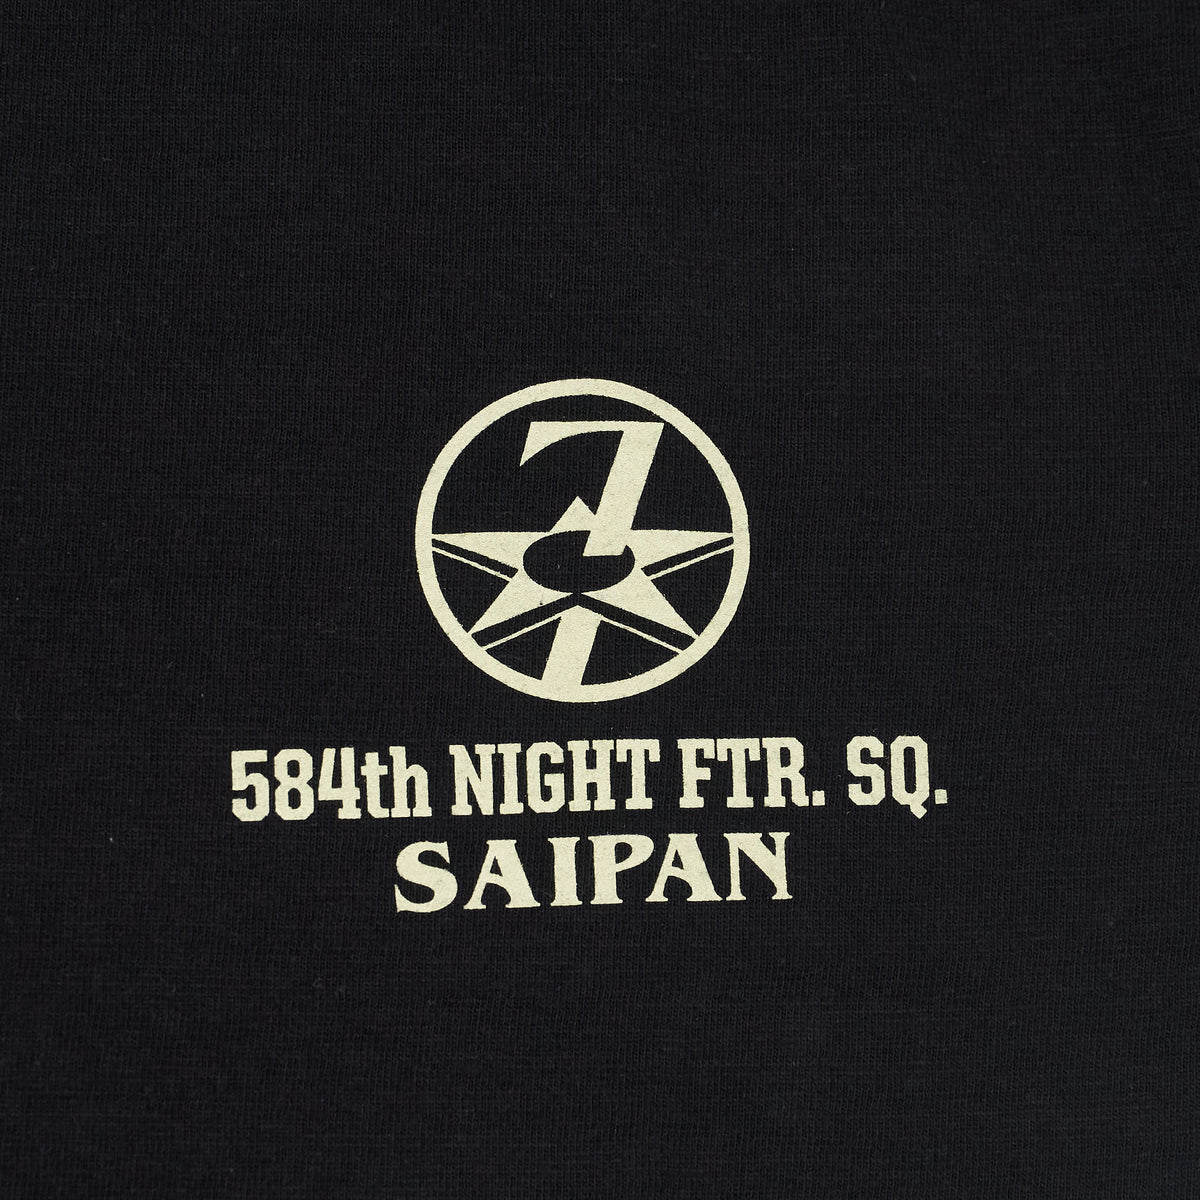 Buzz Rickson&#39;s Night Fighter Crew Neck T-Shirt